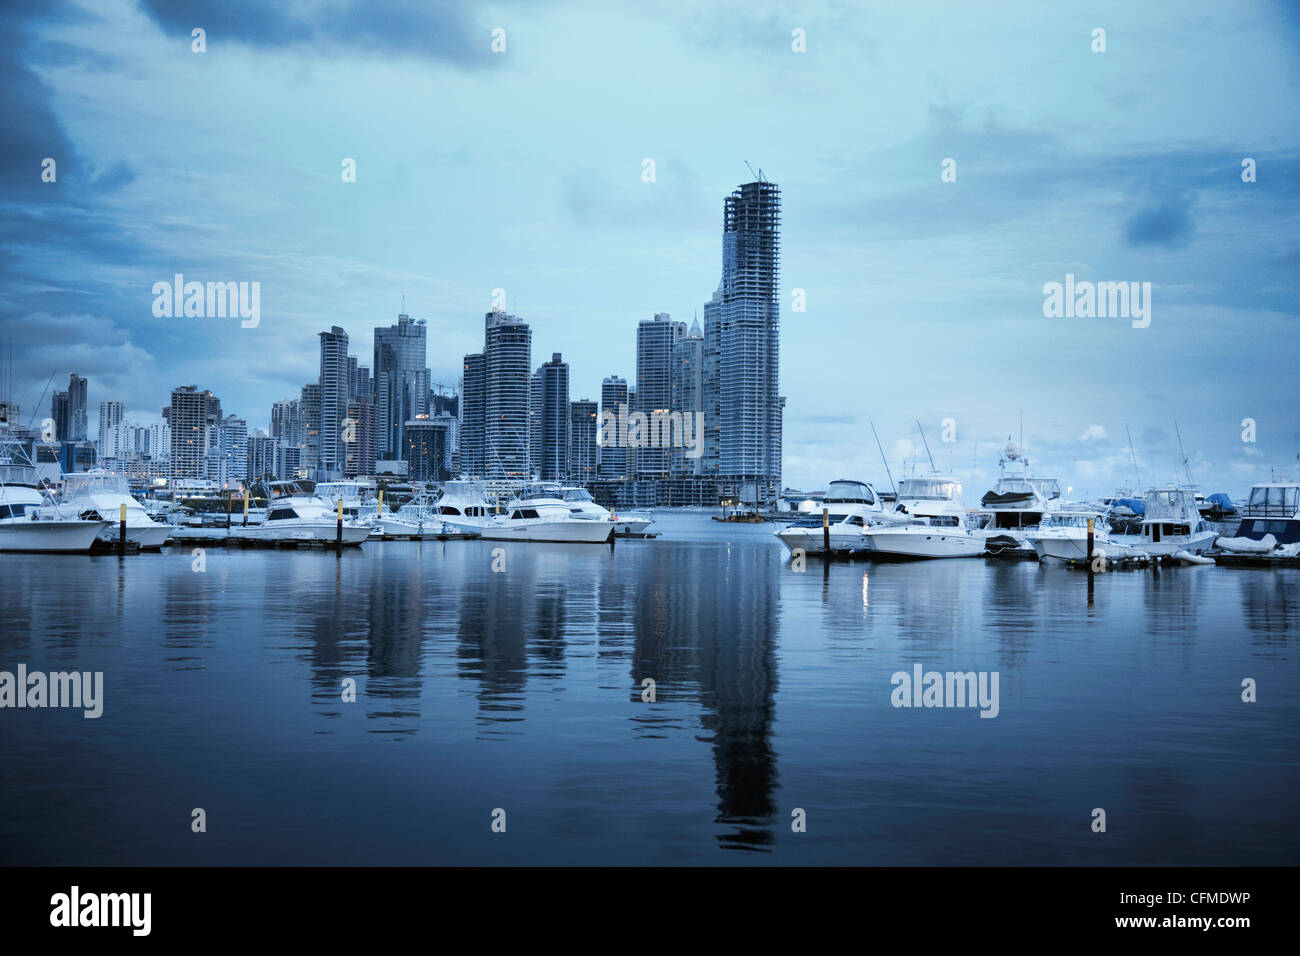 Panama, Panama City, Boats with skyline in background Stock Photo